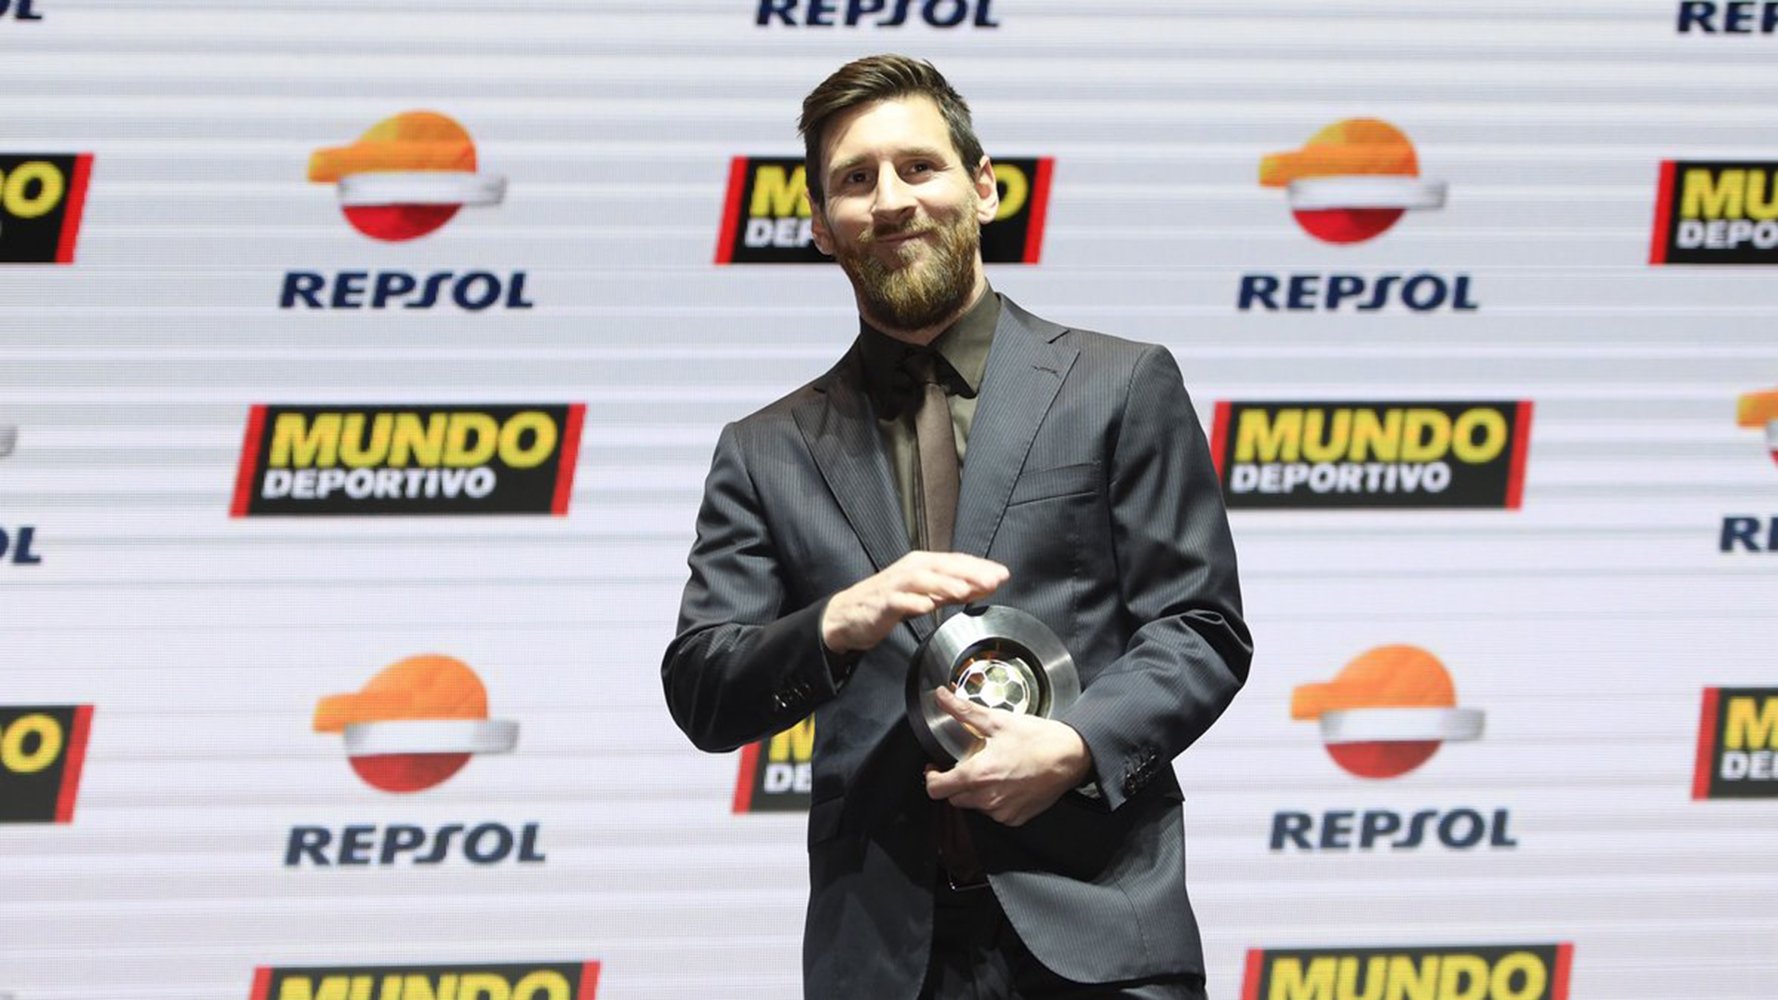 Messi, MVP de la Lliga, ja pensa en la remuntada de Copa